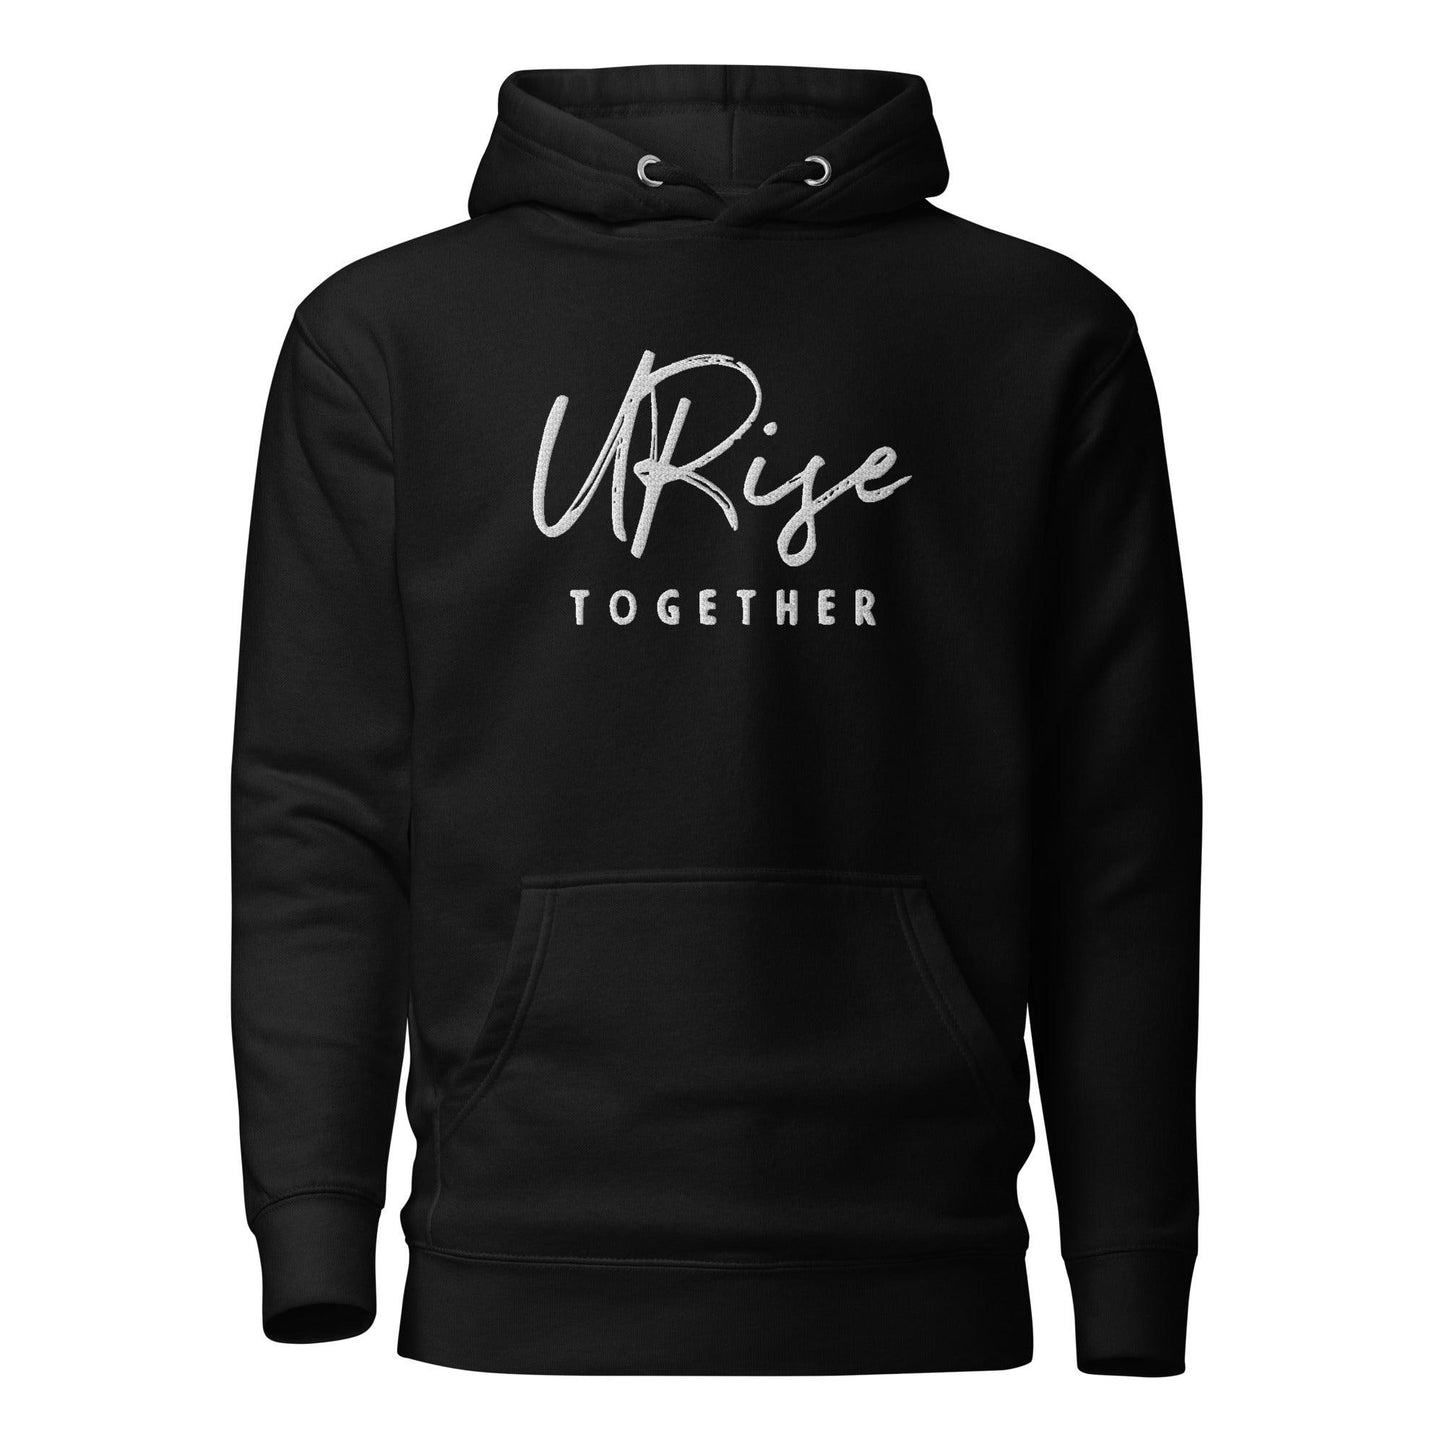 "URise Together" Embroidered logo Hoodie - Black - URiseTogetherApparel